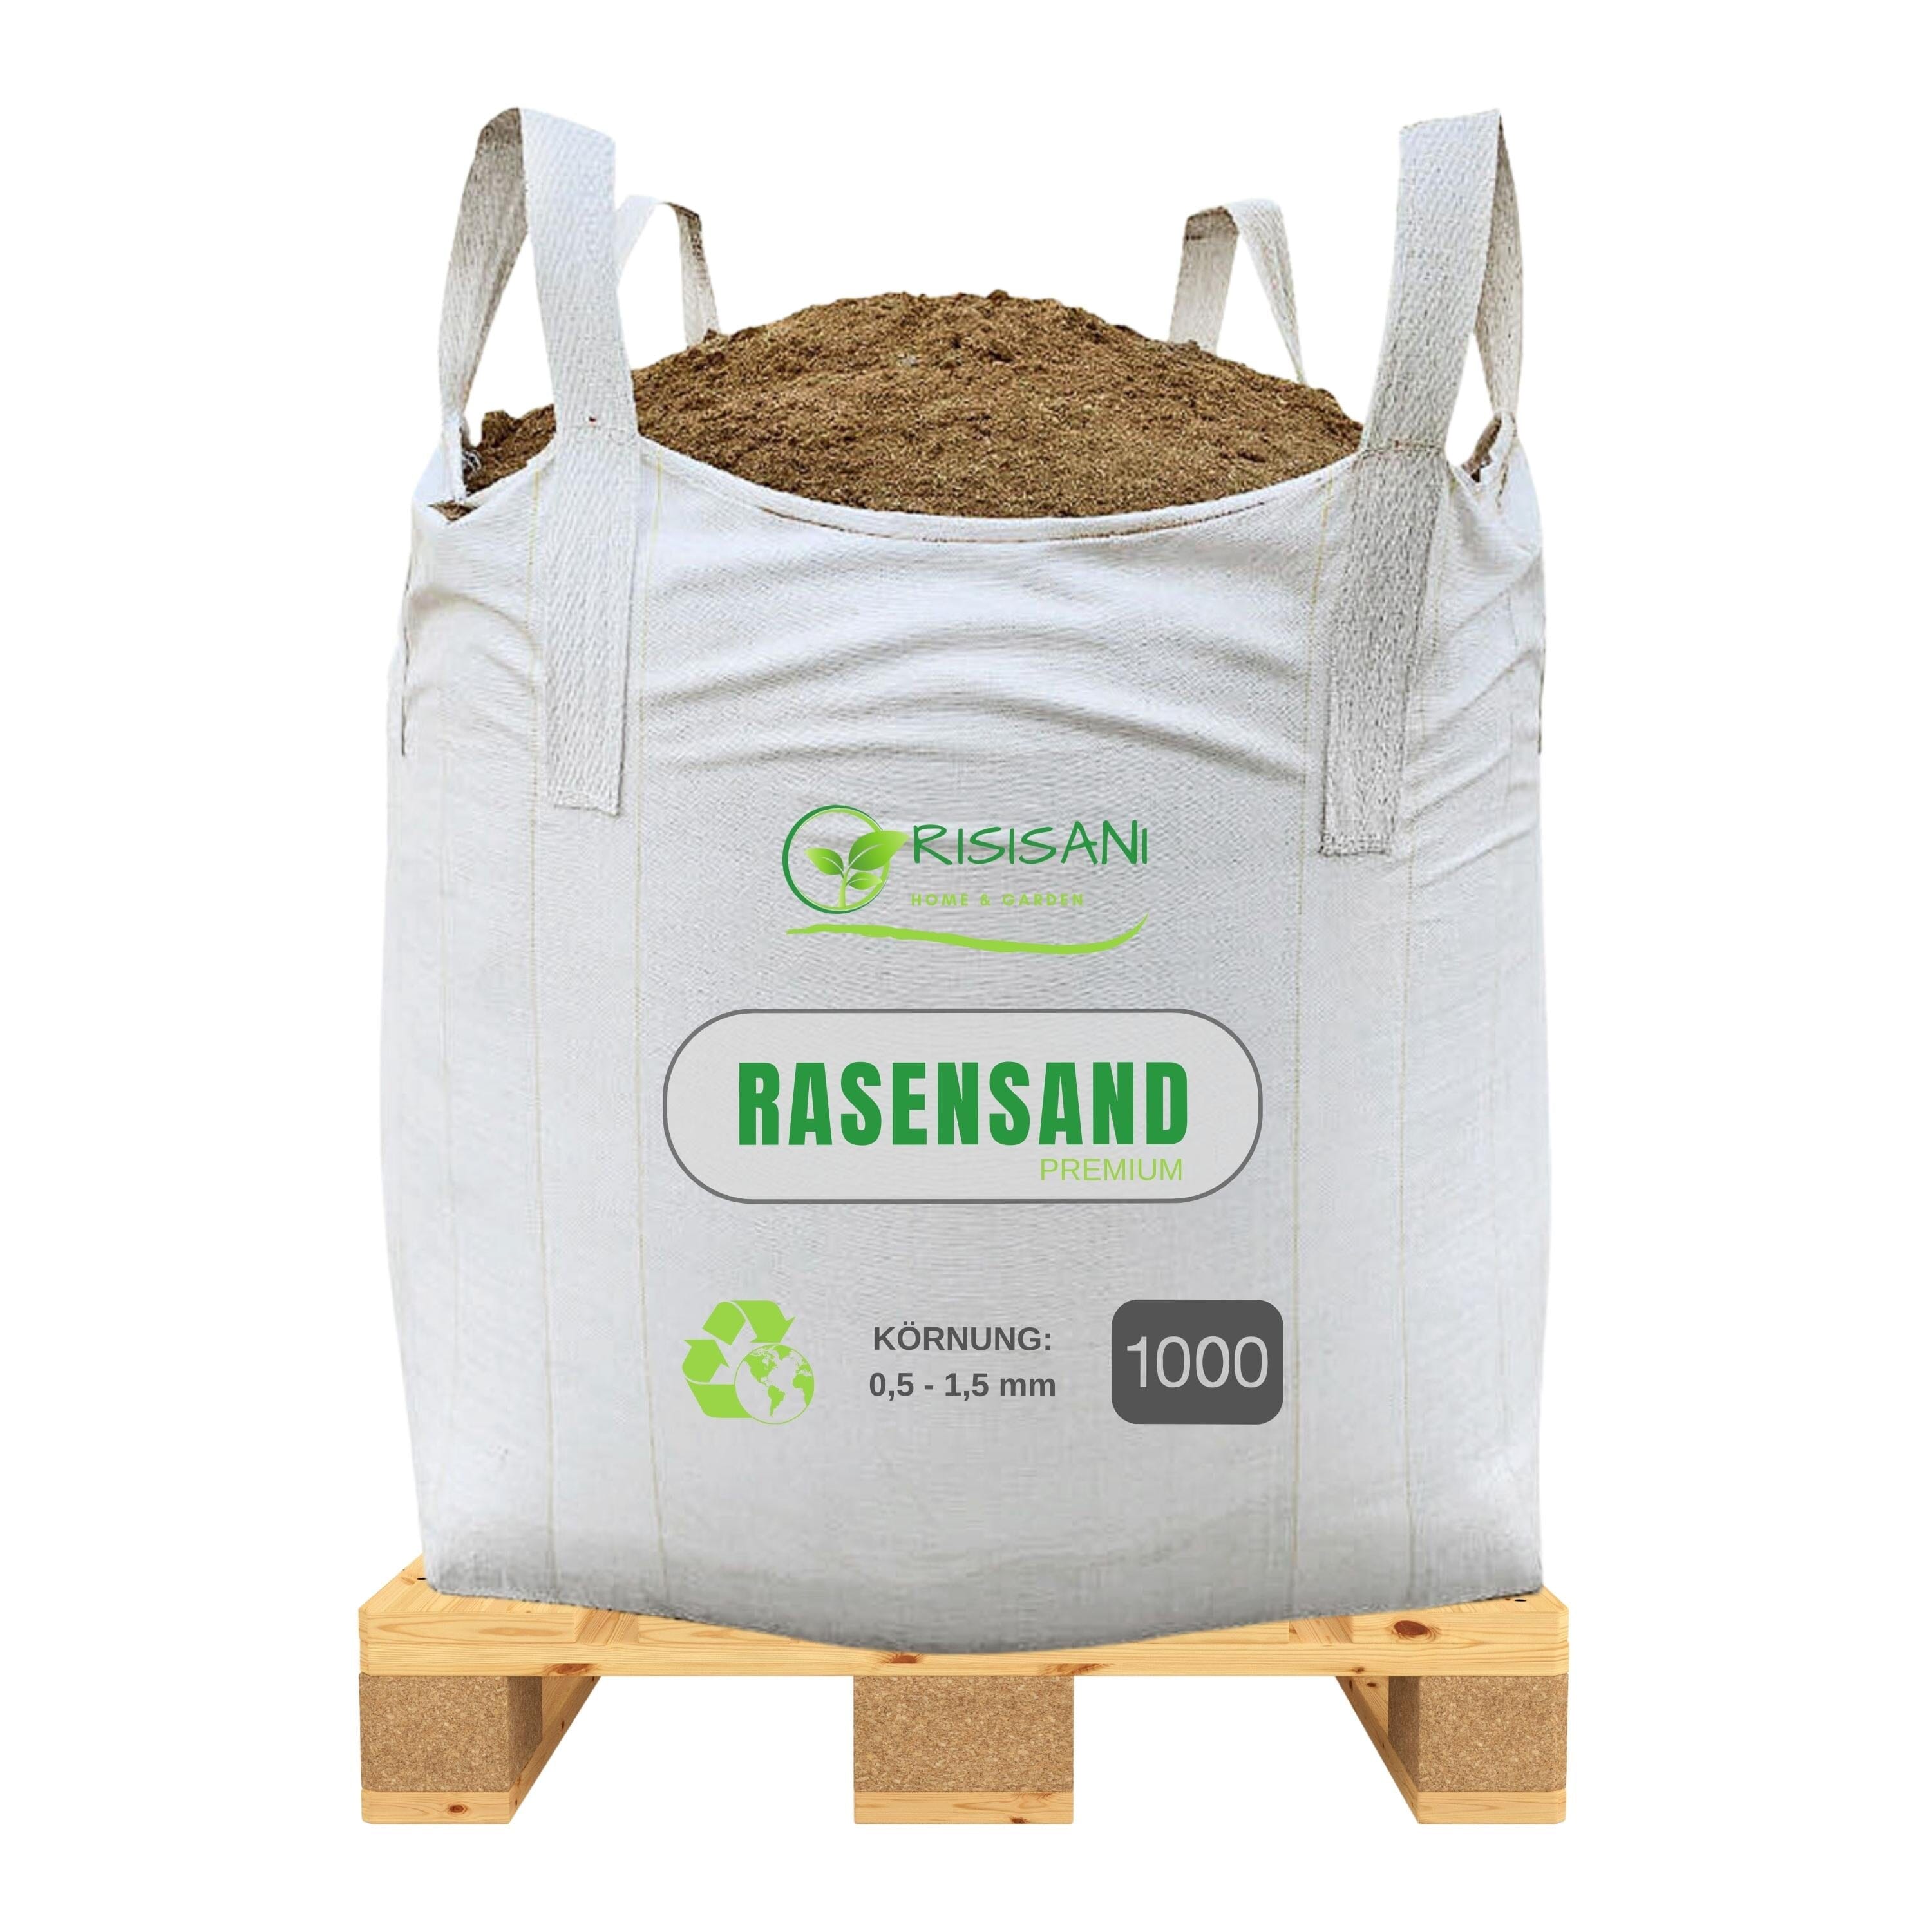 RISISANI Premium lawn sand 1000 kg | quartz sand with grain size 0.5-1.5 mm RISISANI